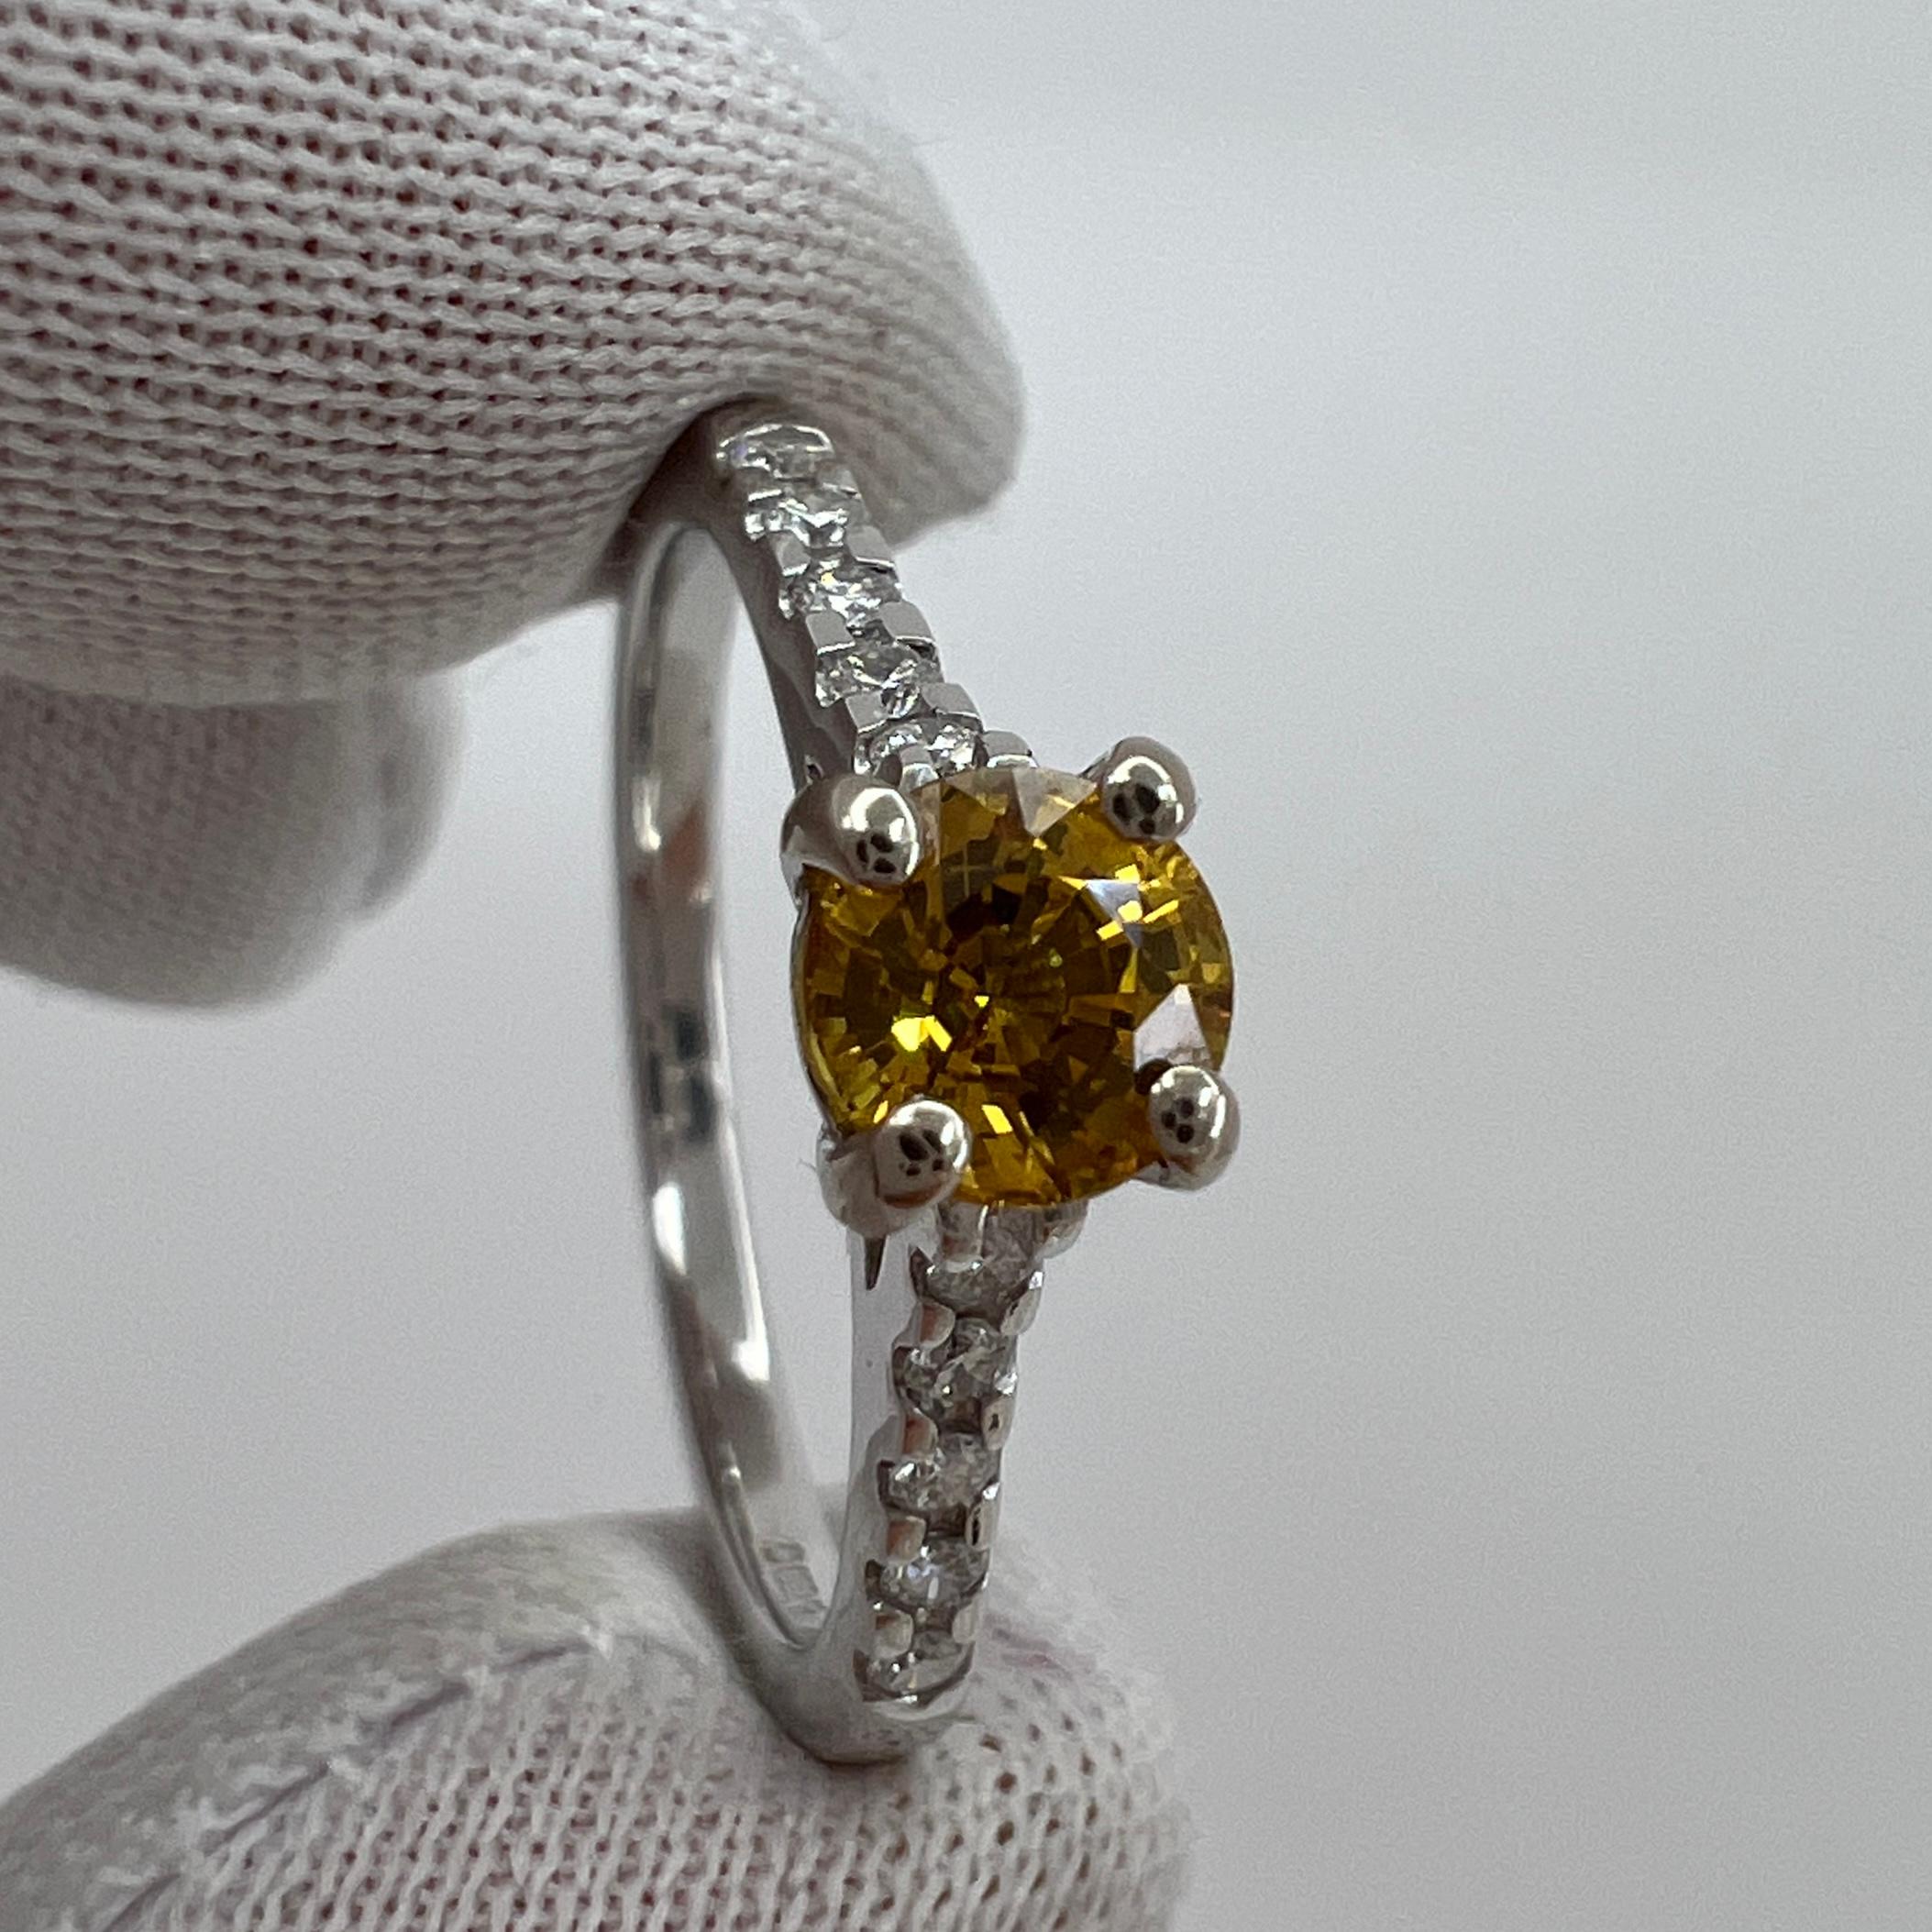 Certified No Heat Fine Ceylon Yellow Orange Sapphire Diamond 18k White Gold Ring 1